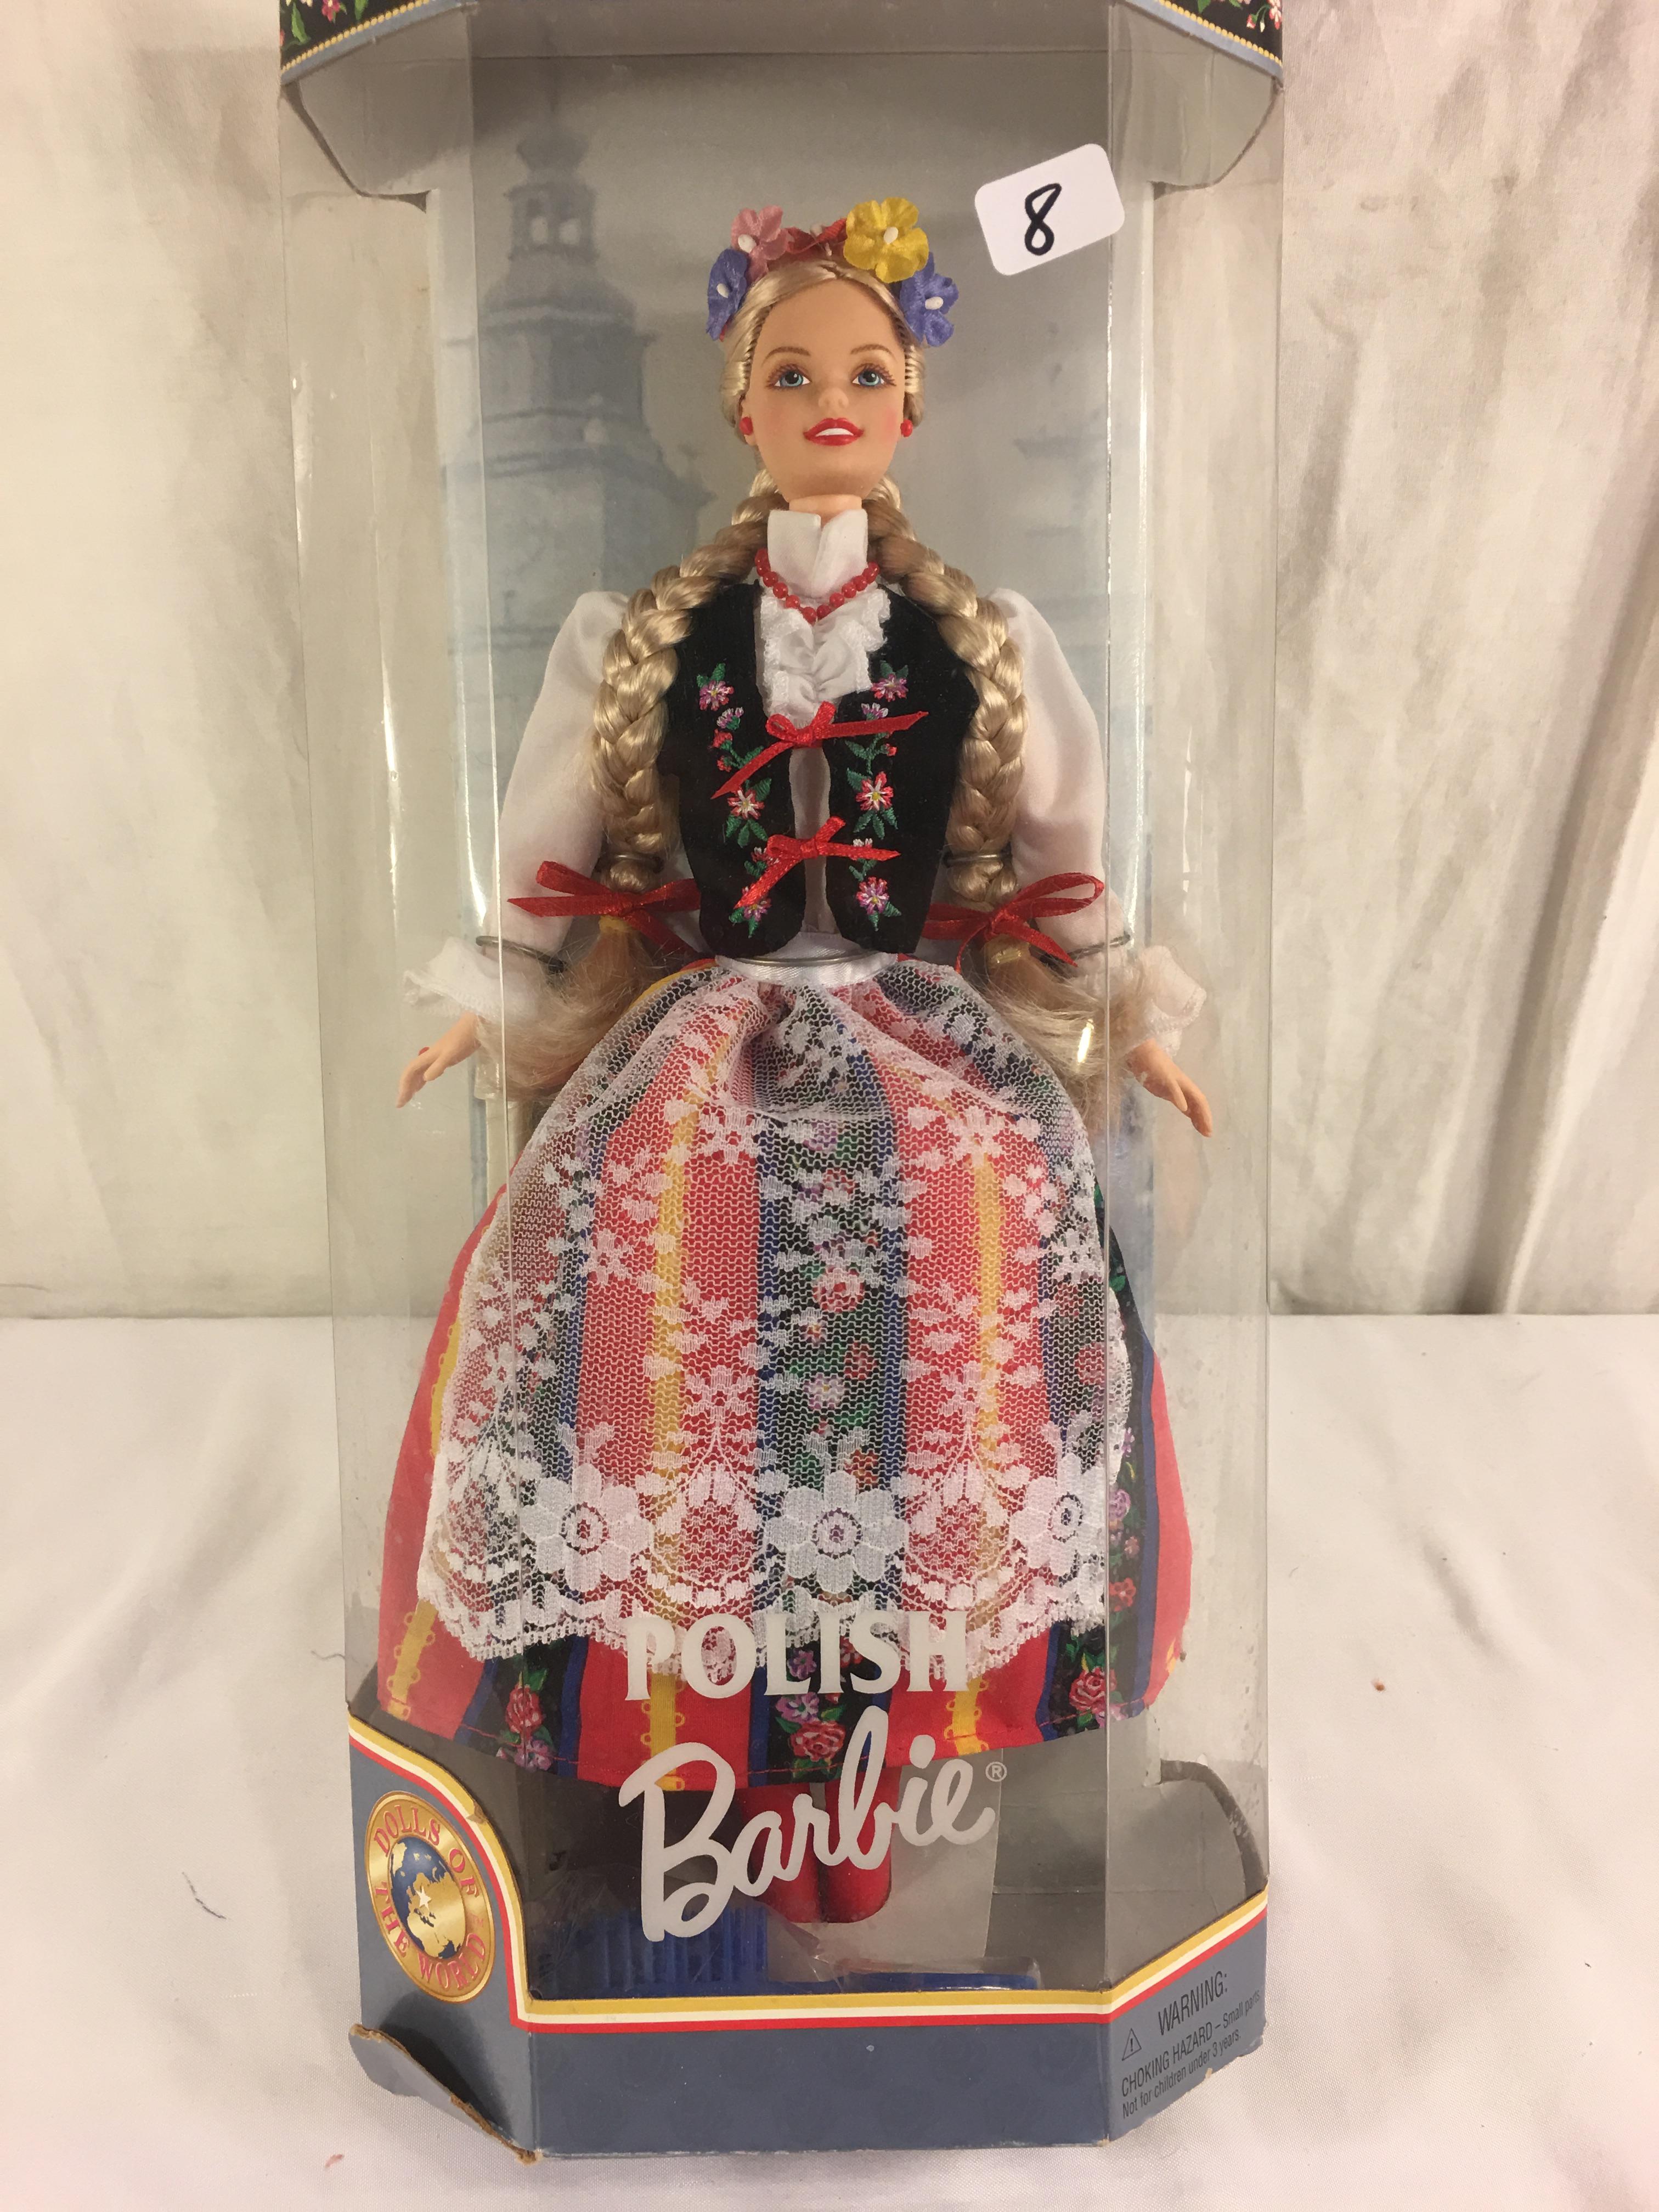 NIB Collector Edition Barbie Mattel Dolls Of The World Polish Barbie 18560 Size Box: 12.5"T Box